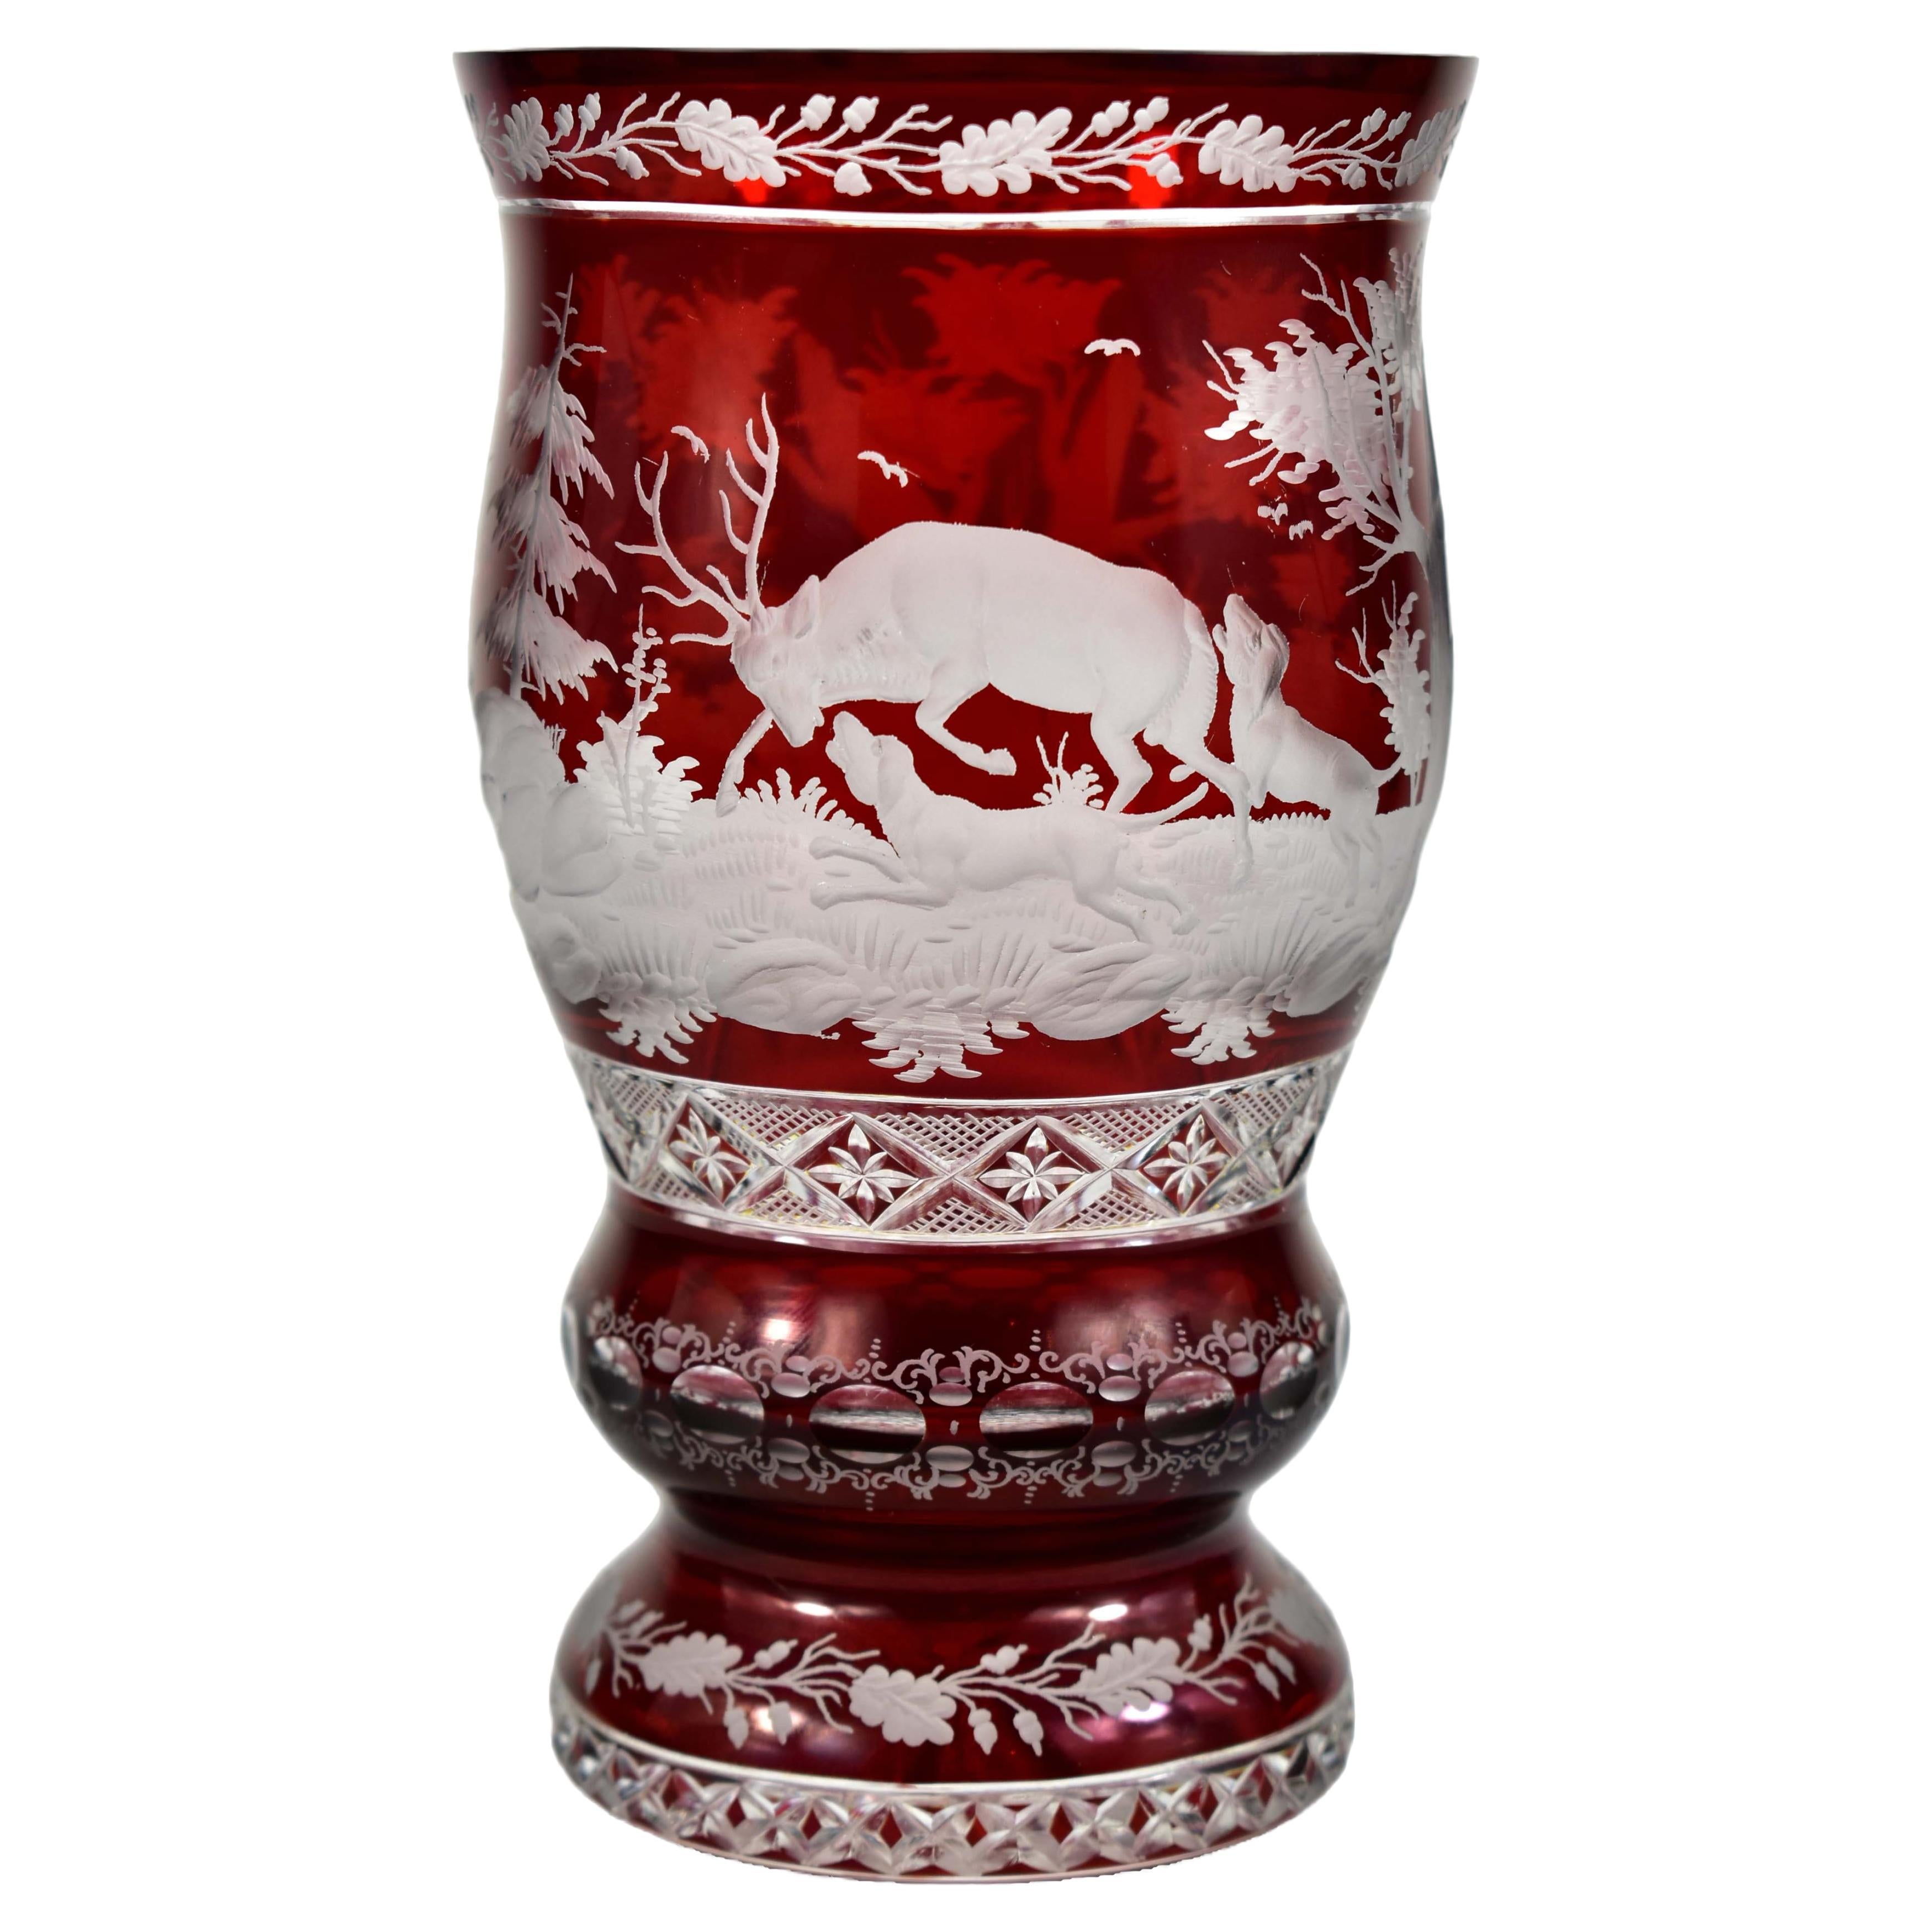 Ruby Glass Goblet - Hunting motif - Bohemian Glass - 19-20 century